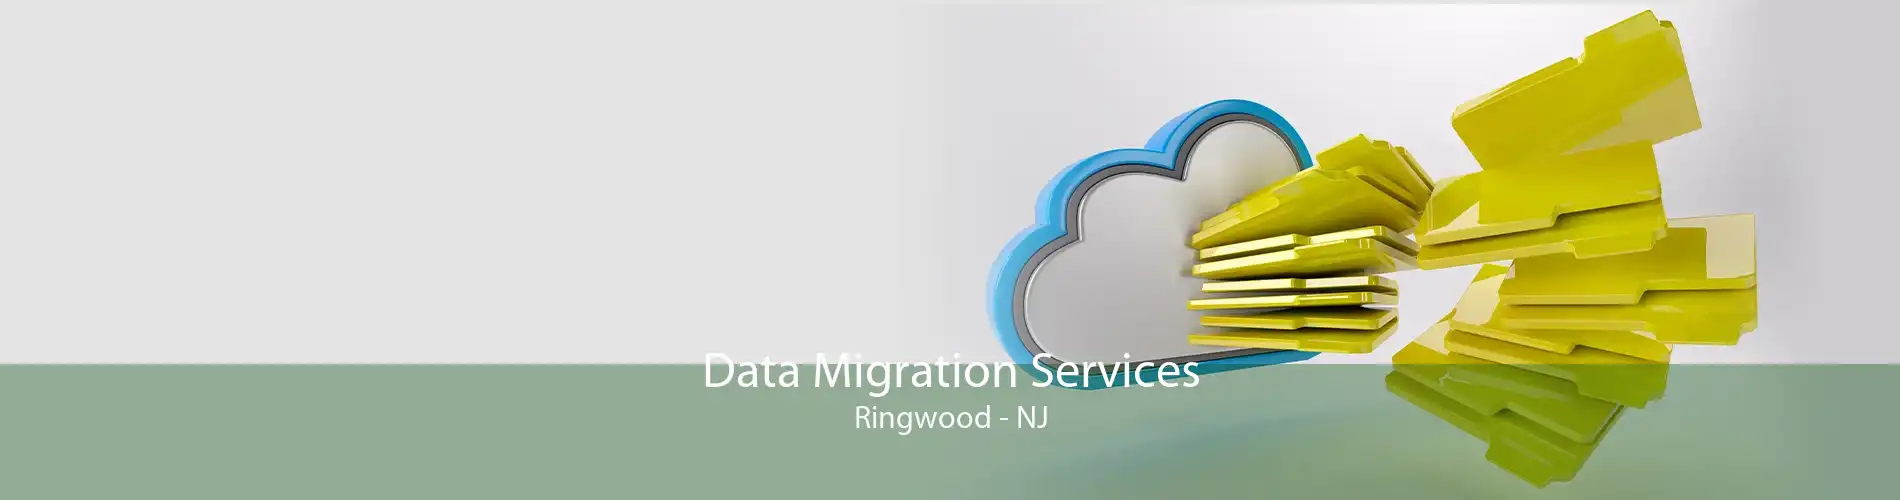 Data Migration Services Ringwood - NJ